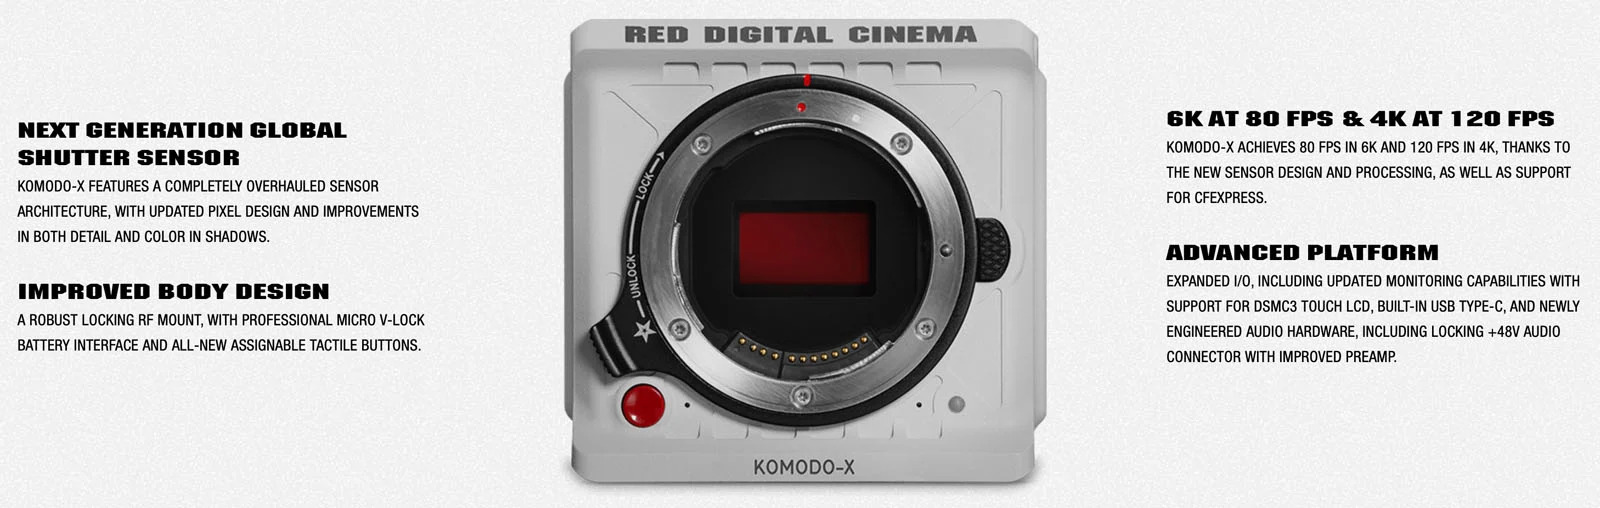 RED Unveils Komodo-X 6K Cine Camera with New Sensor and Faster Framerates 